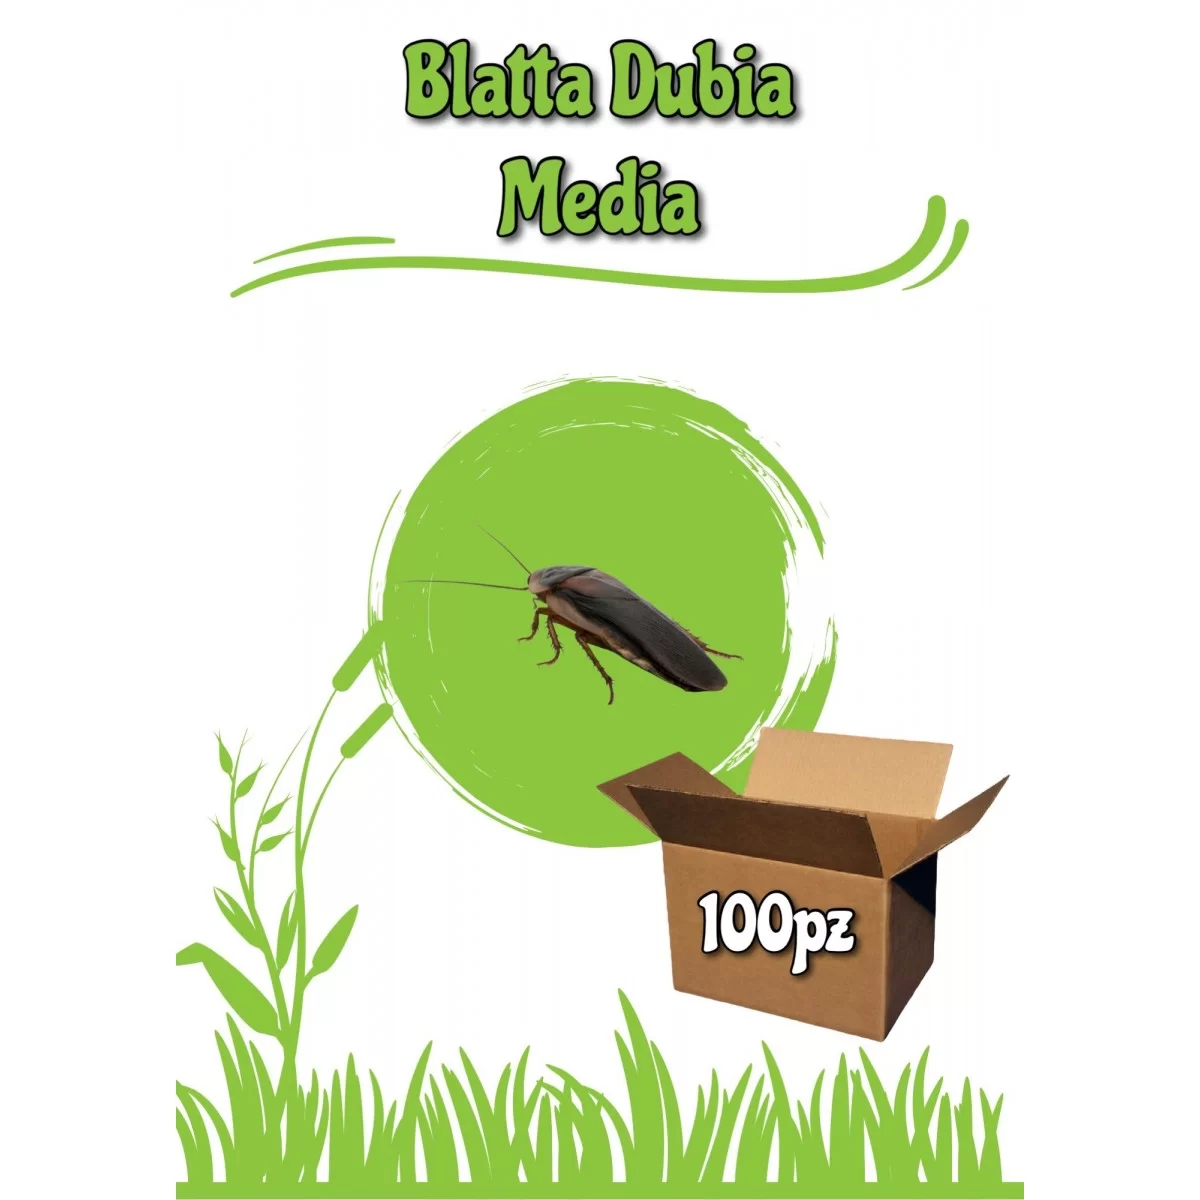 Blatta Dubia Media